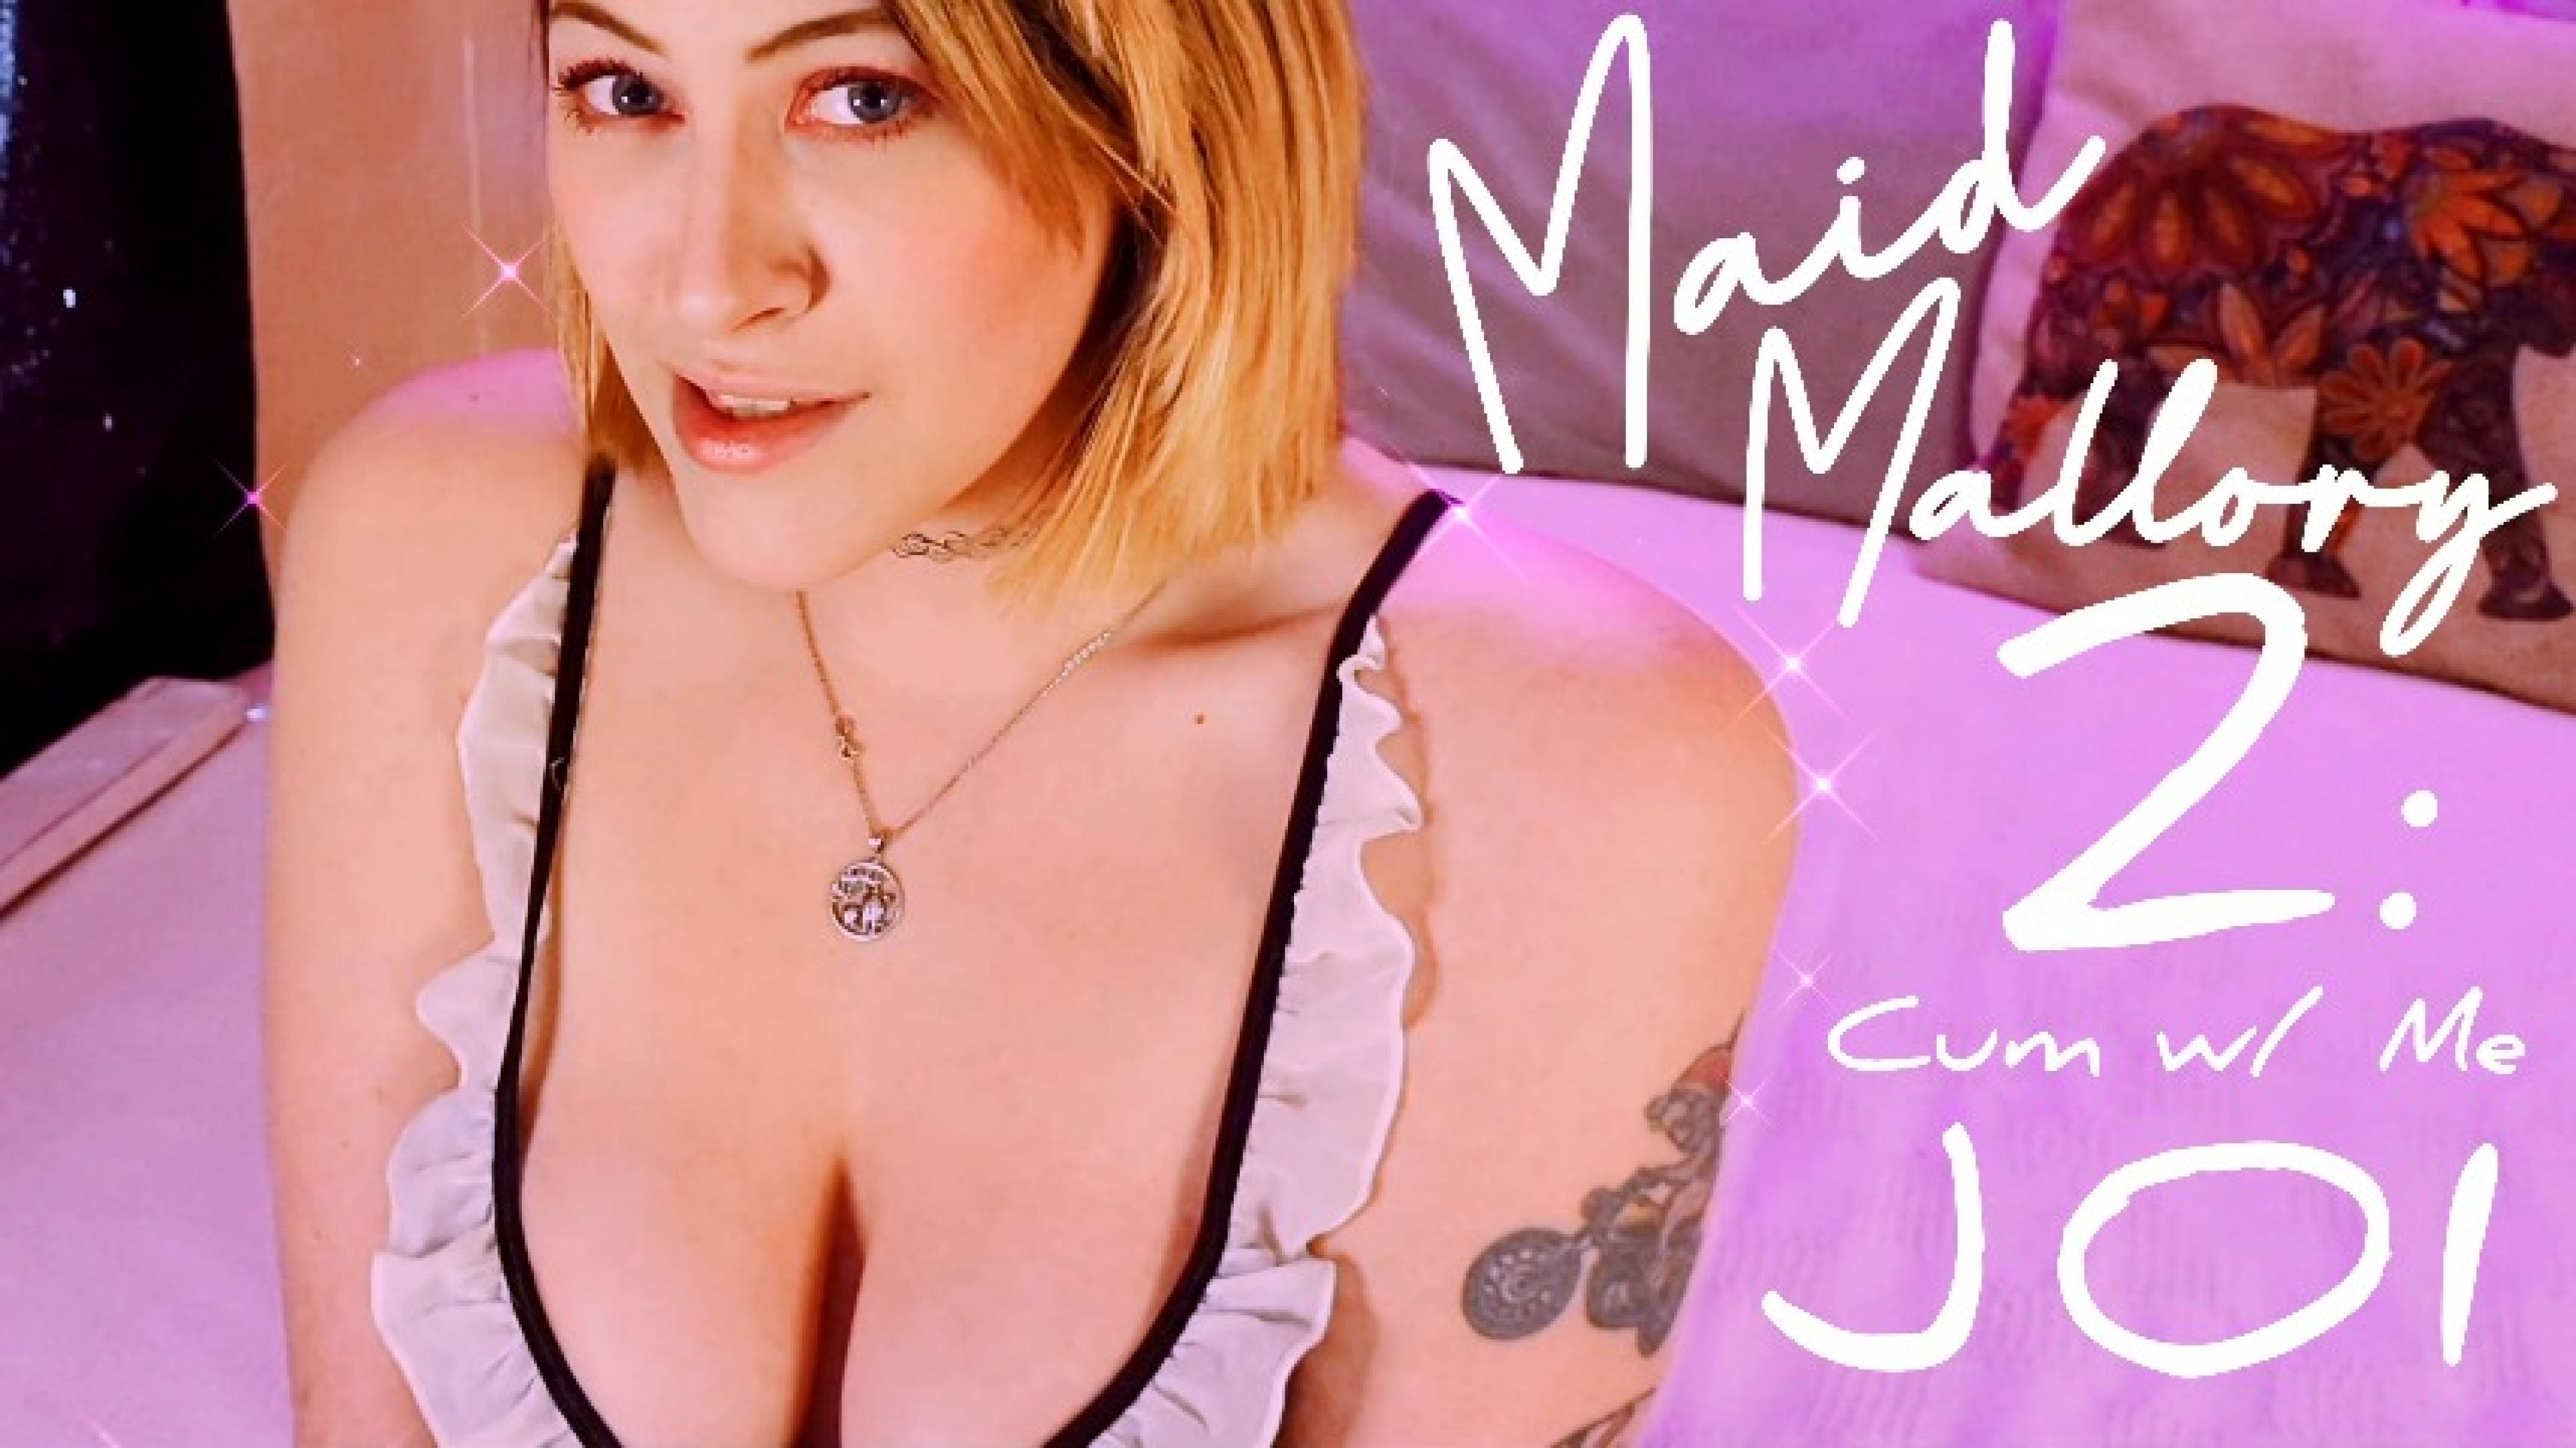 Maid Mallory 2: Cum w/ Me JOI